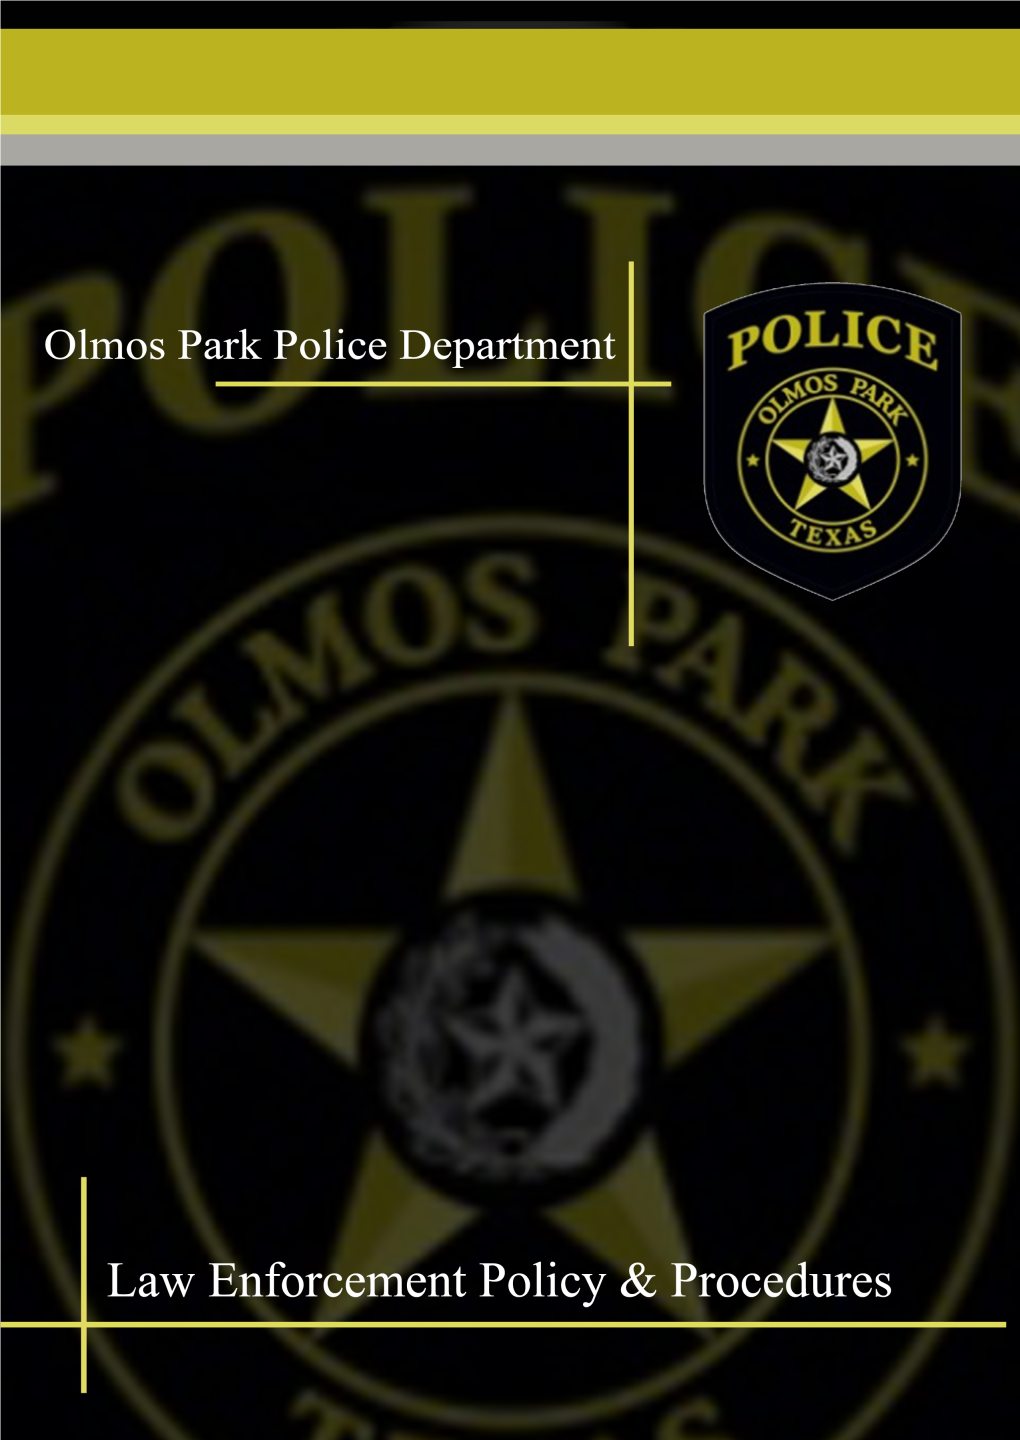 Olmos Park Police Department Policies & Procedures Manual